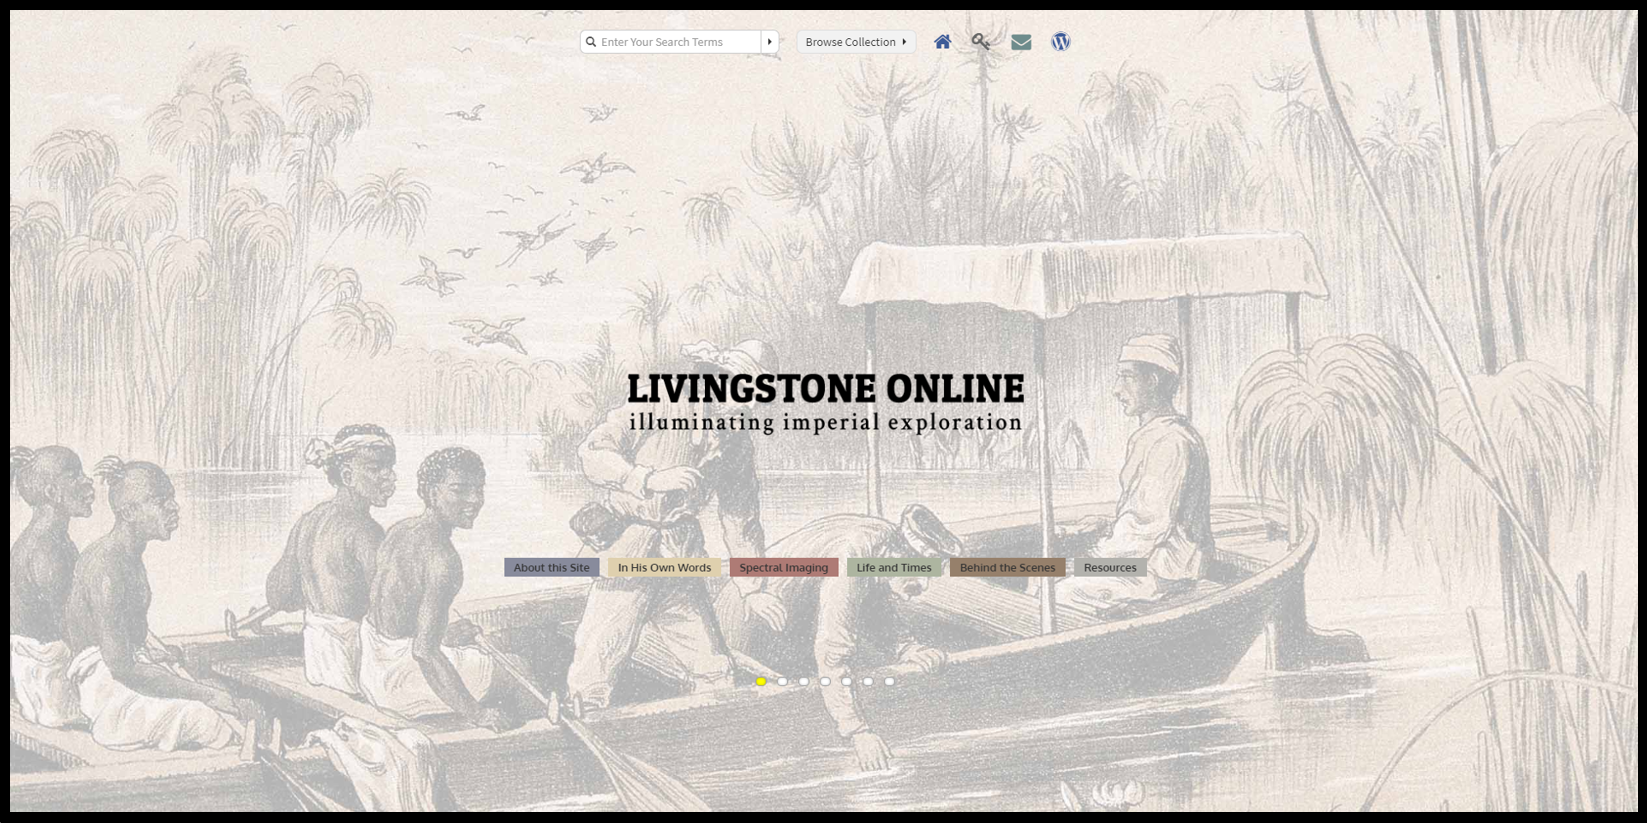 Livingstone Online 웹사이트 가기